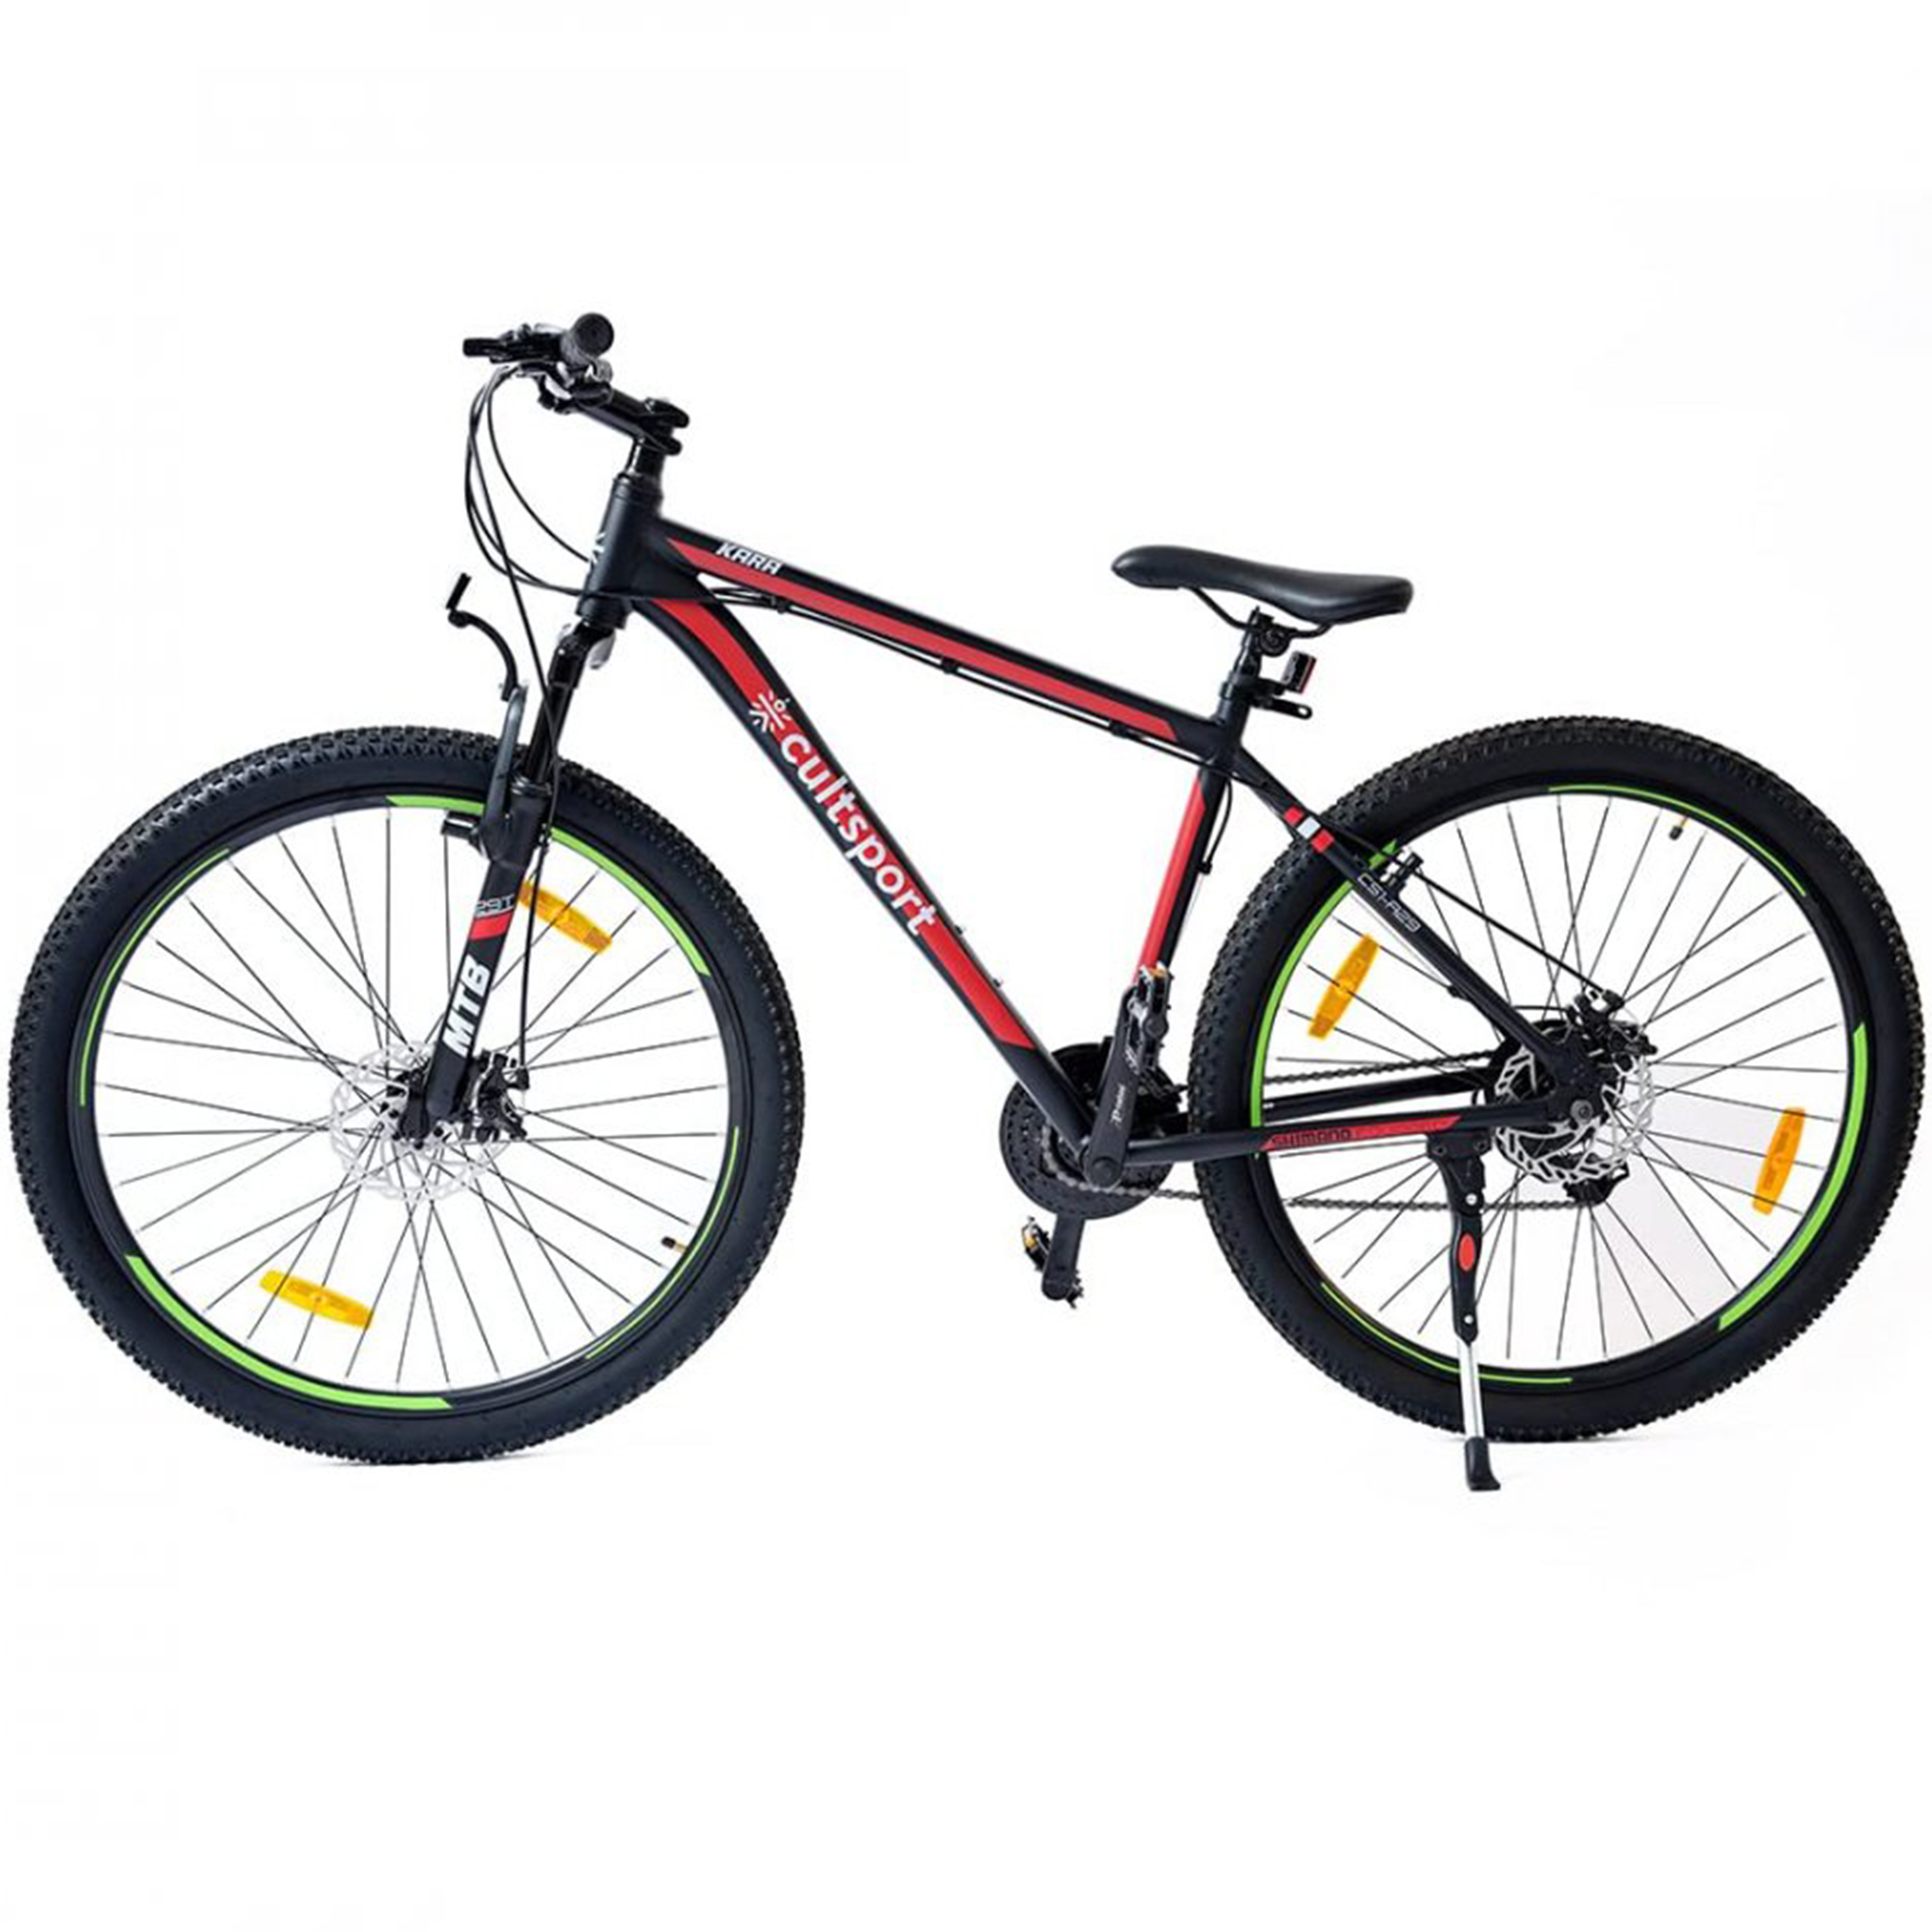 Mountainbike 29" | 21 växlar - Shimano | Kara - Röd/svart